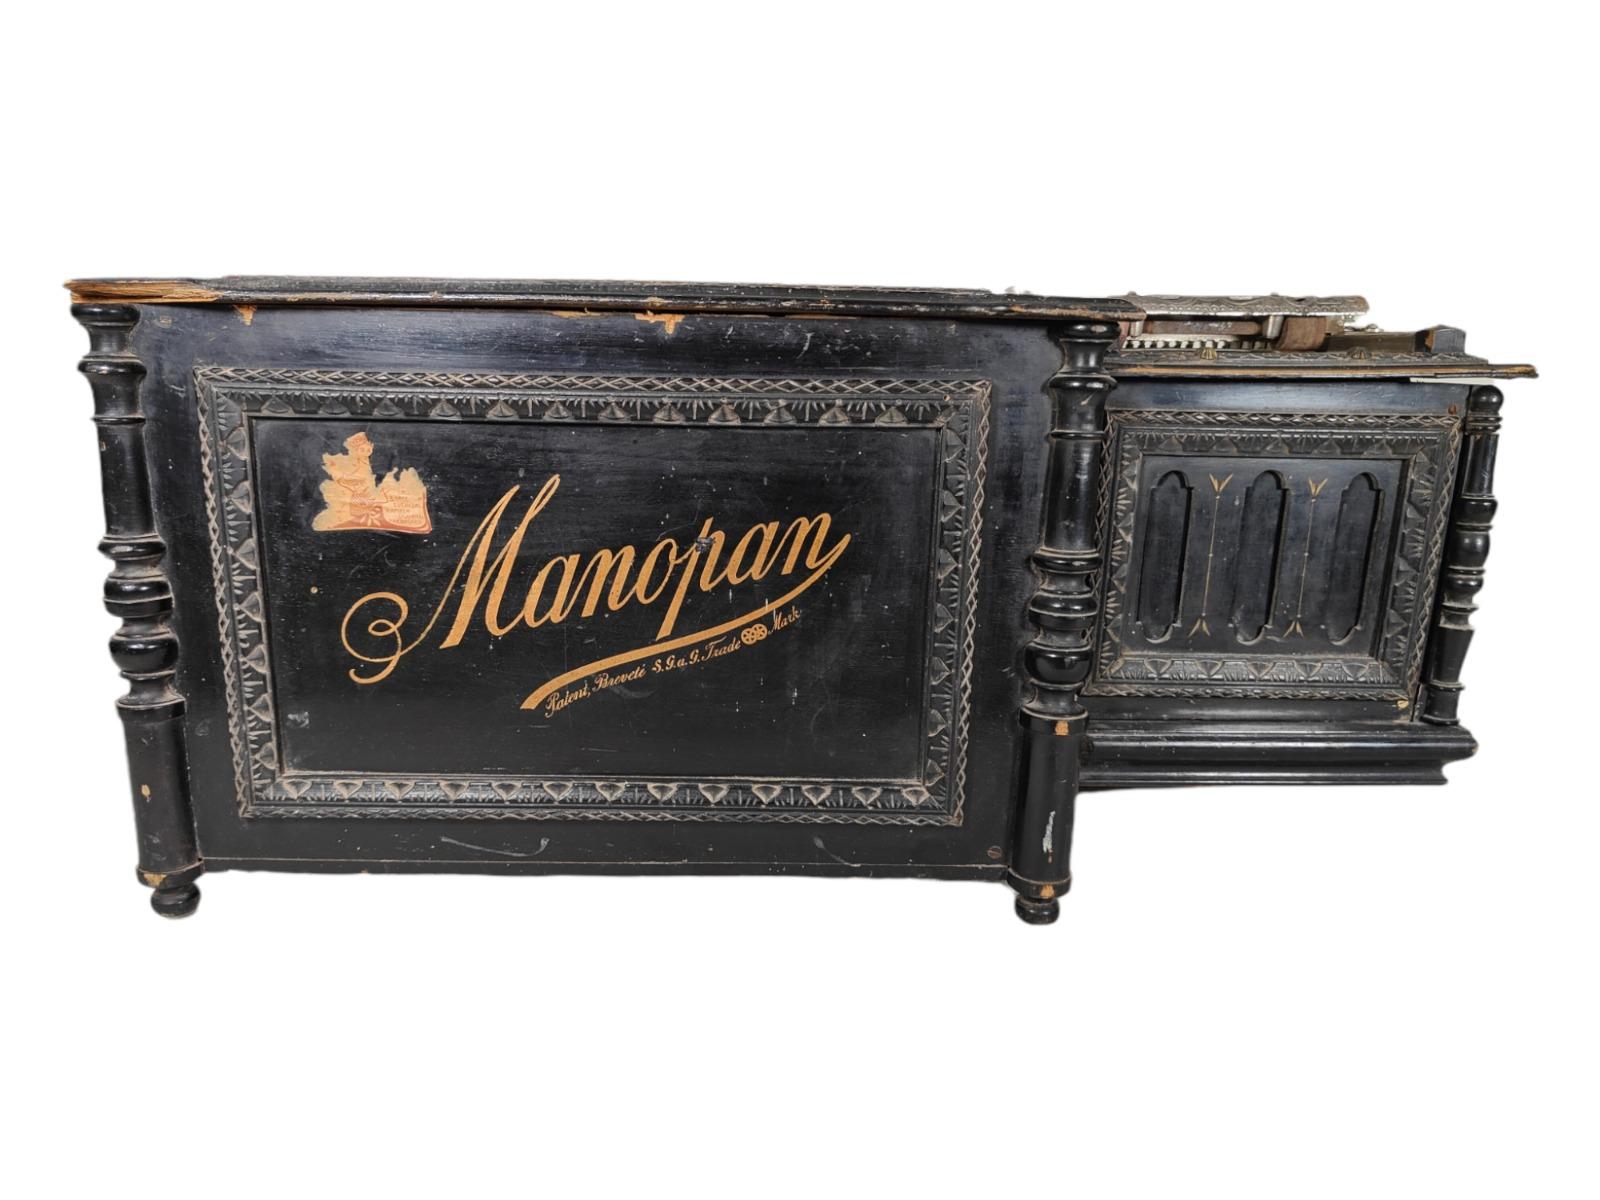 Manopan-Kragen-Musikorgel, 19. Jahrhundert (Holz) im Angebot